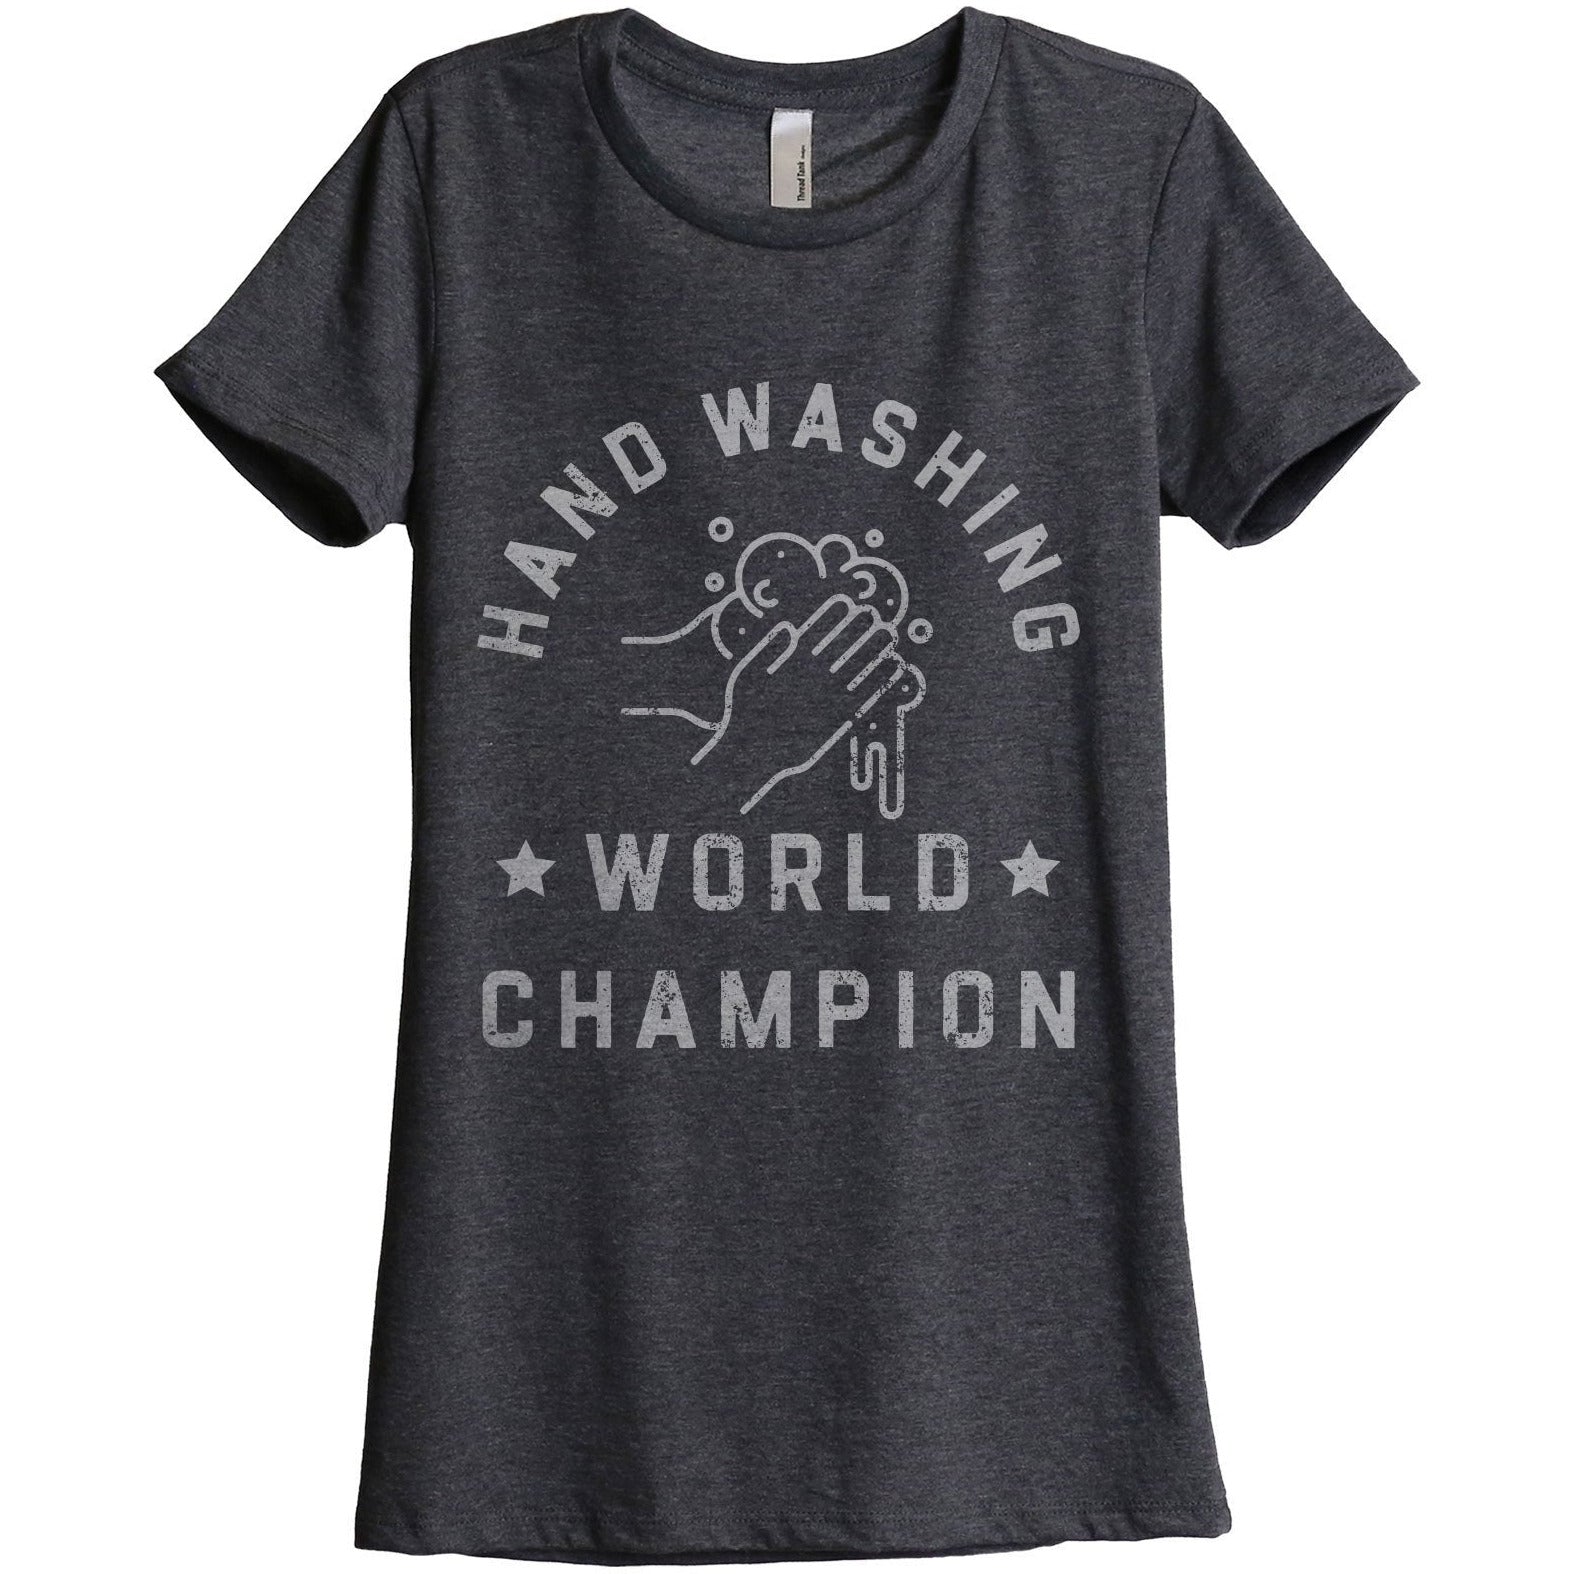 Hand Washing World Champion Women's Relaxed Crewneck T-Shirt Top Tee Charcoal Grey
